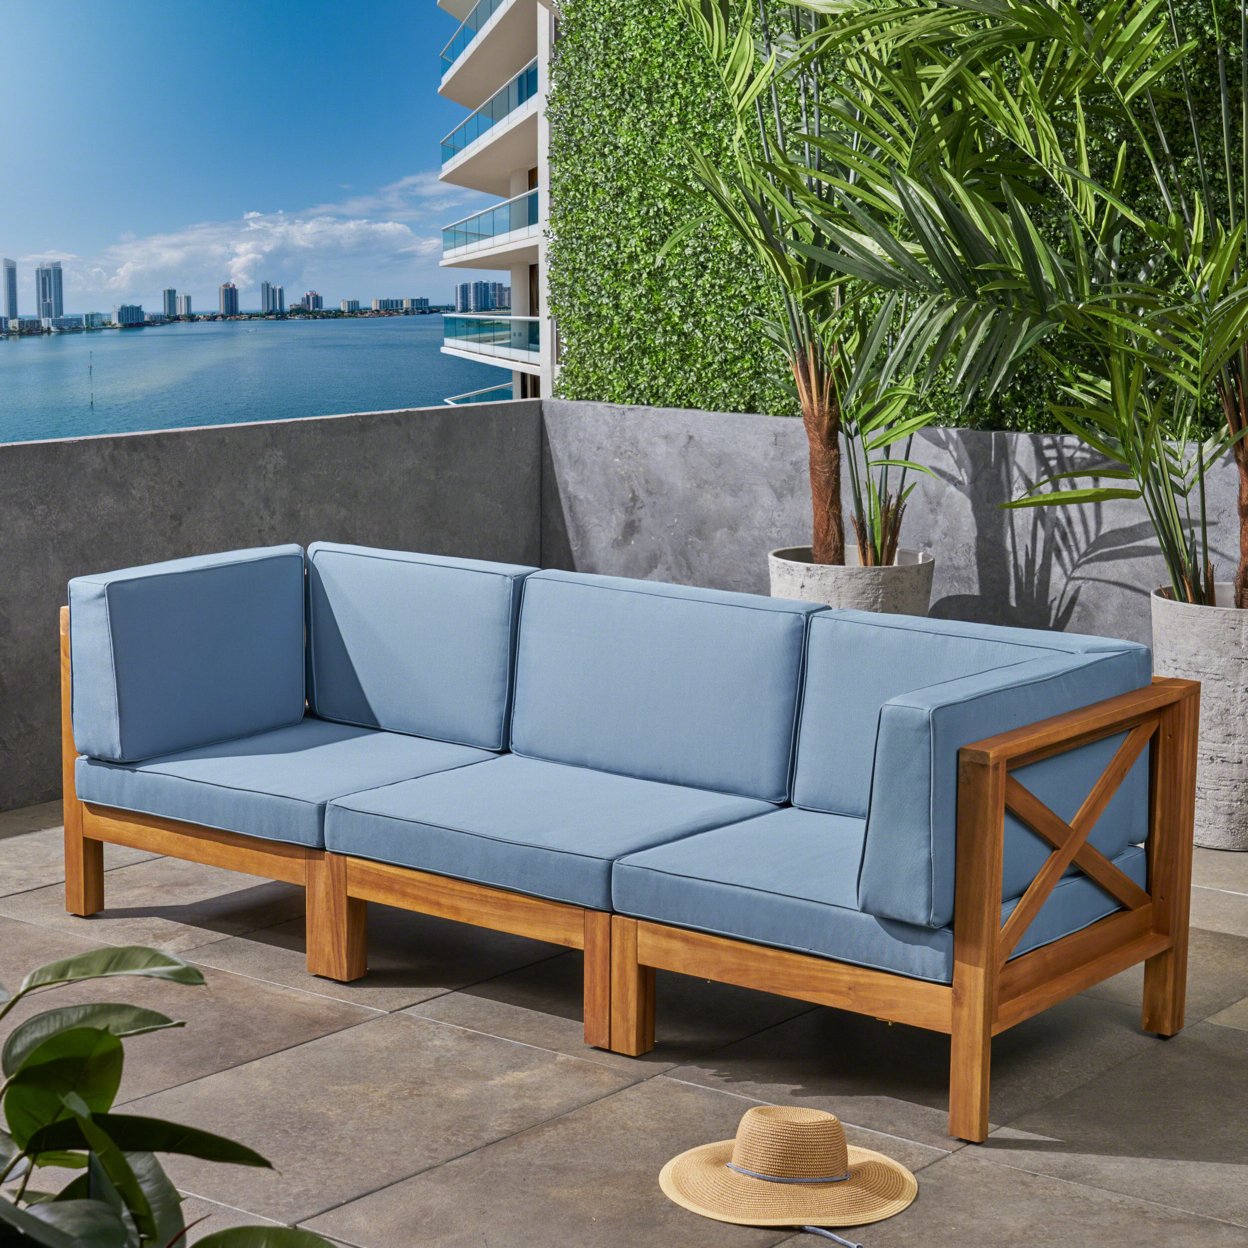 Brava Outdoor Modular Acacia Wood Sofa With Cushions - Teak Finish + Beige